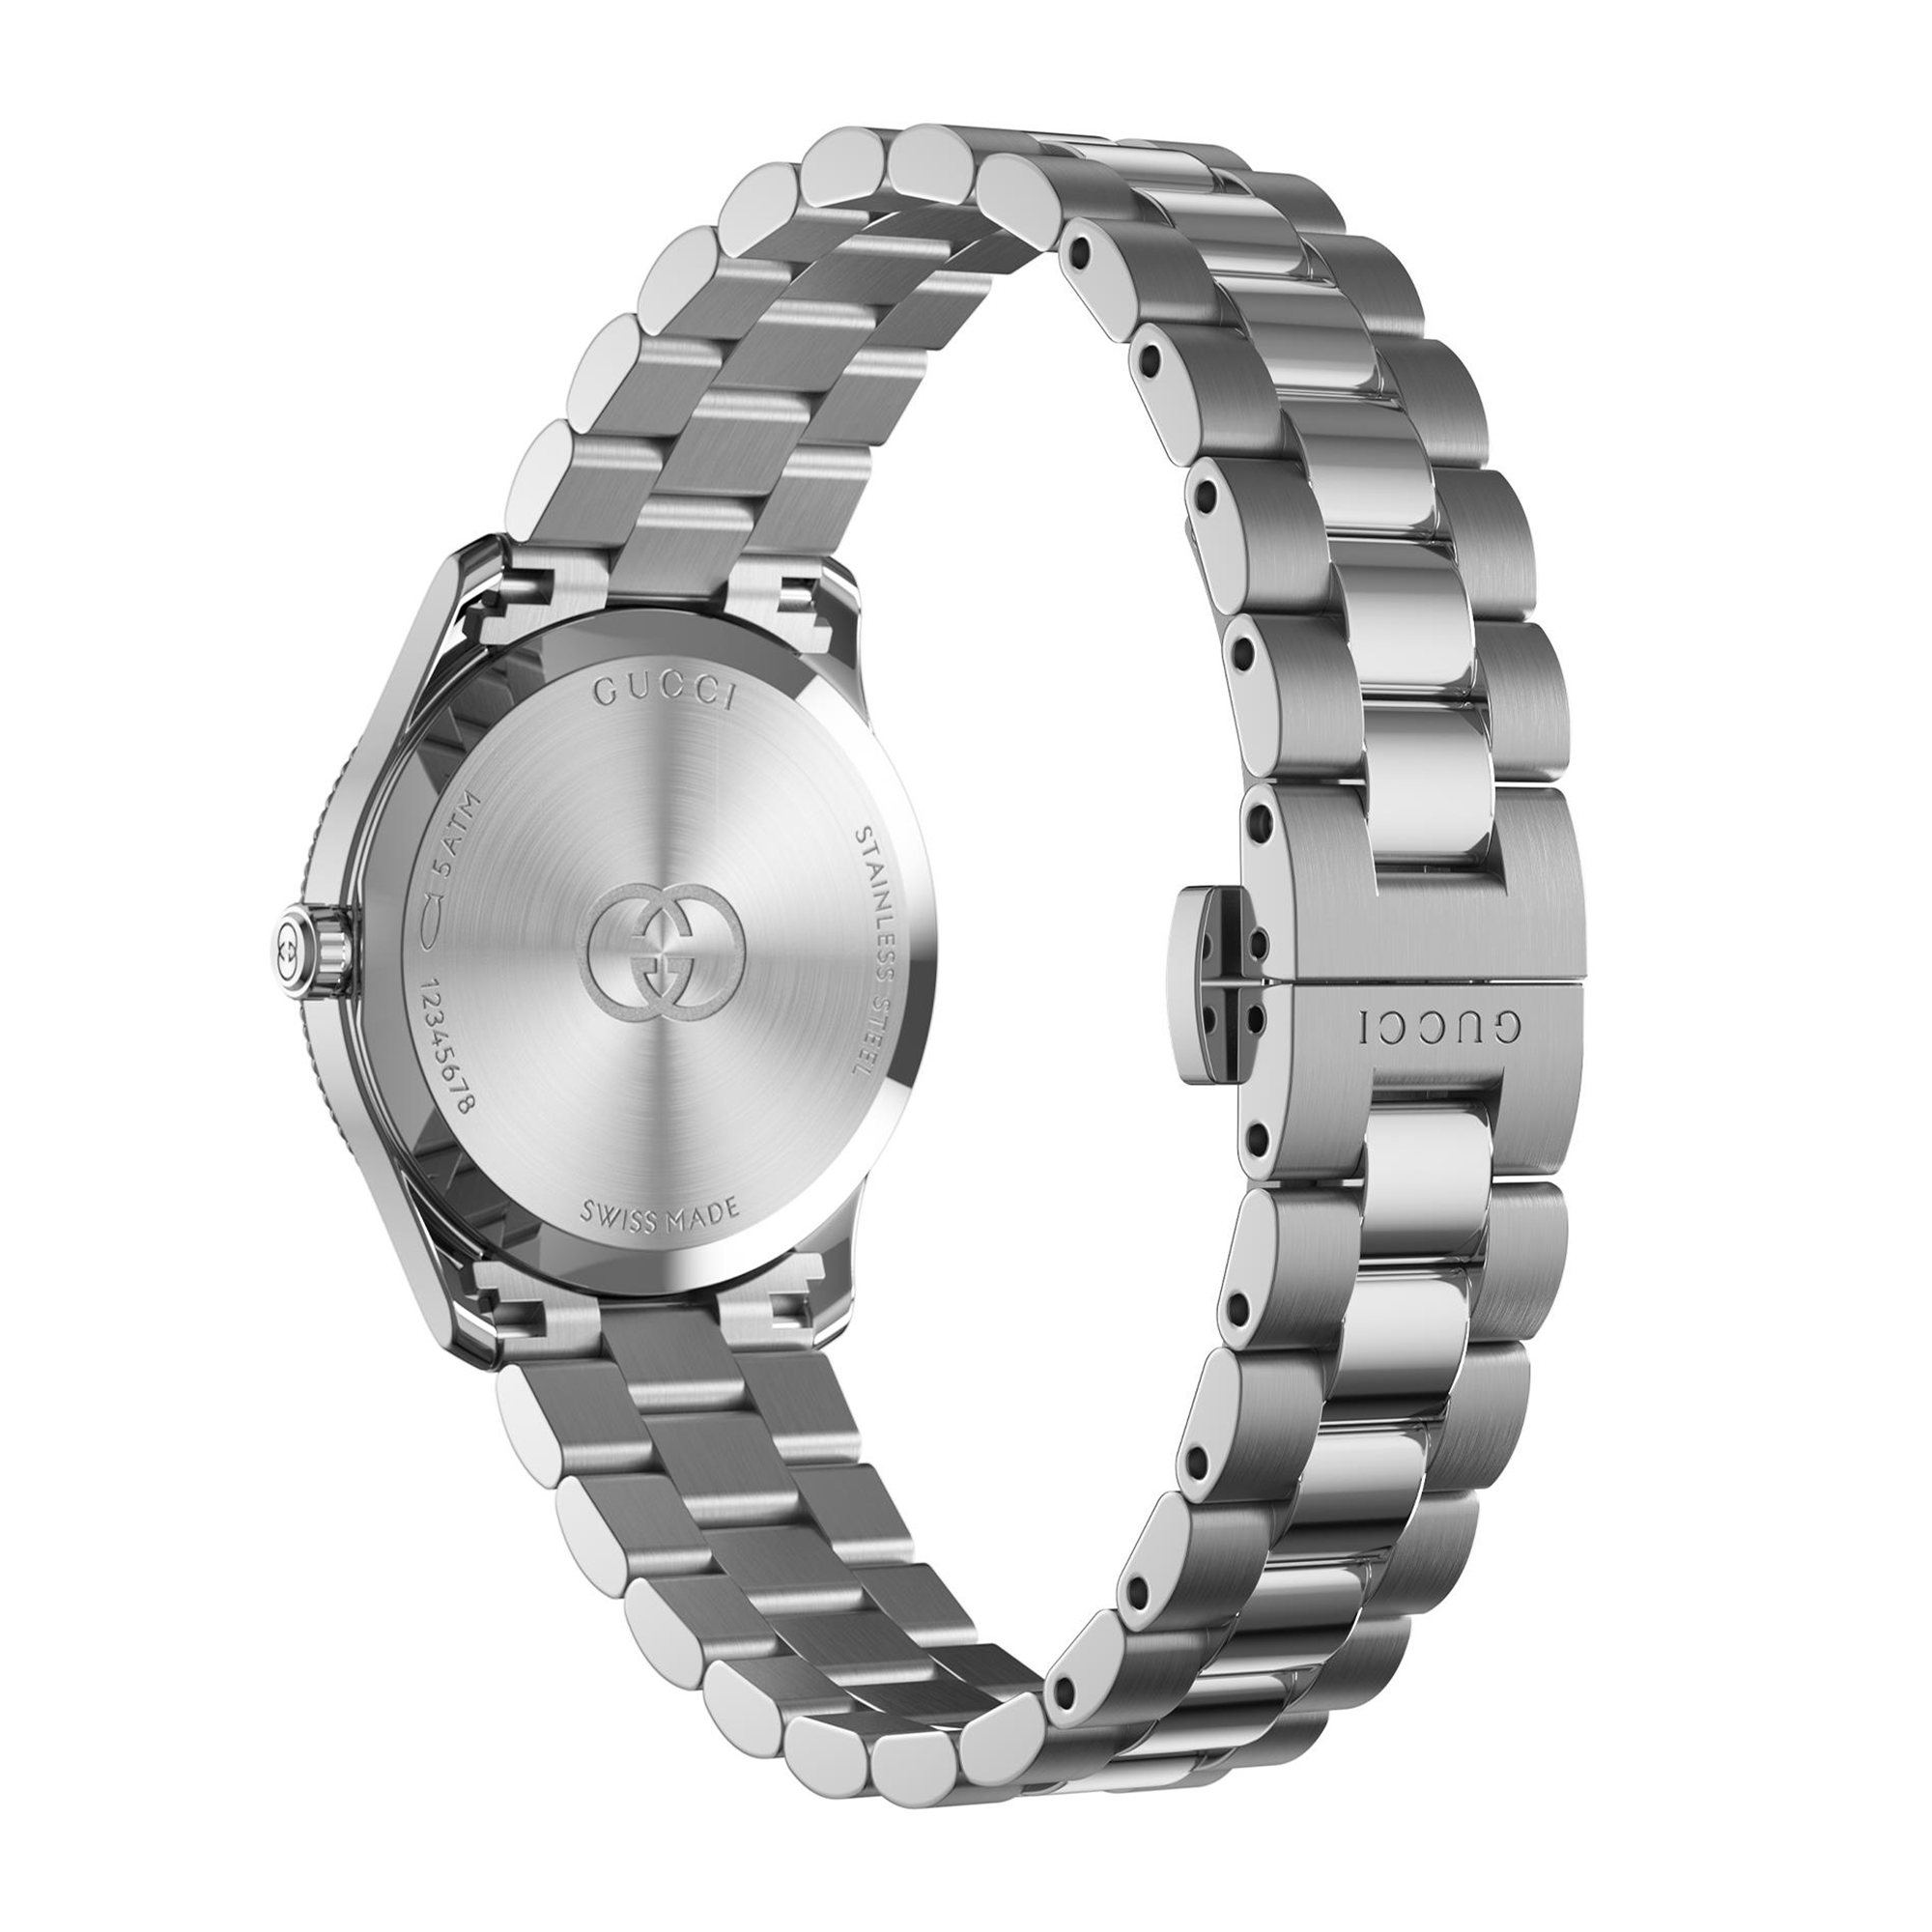 G-Timeless Quartz 29mm Stainless Steel White Mother of Pearl Diamond Dial Bracelet Watch